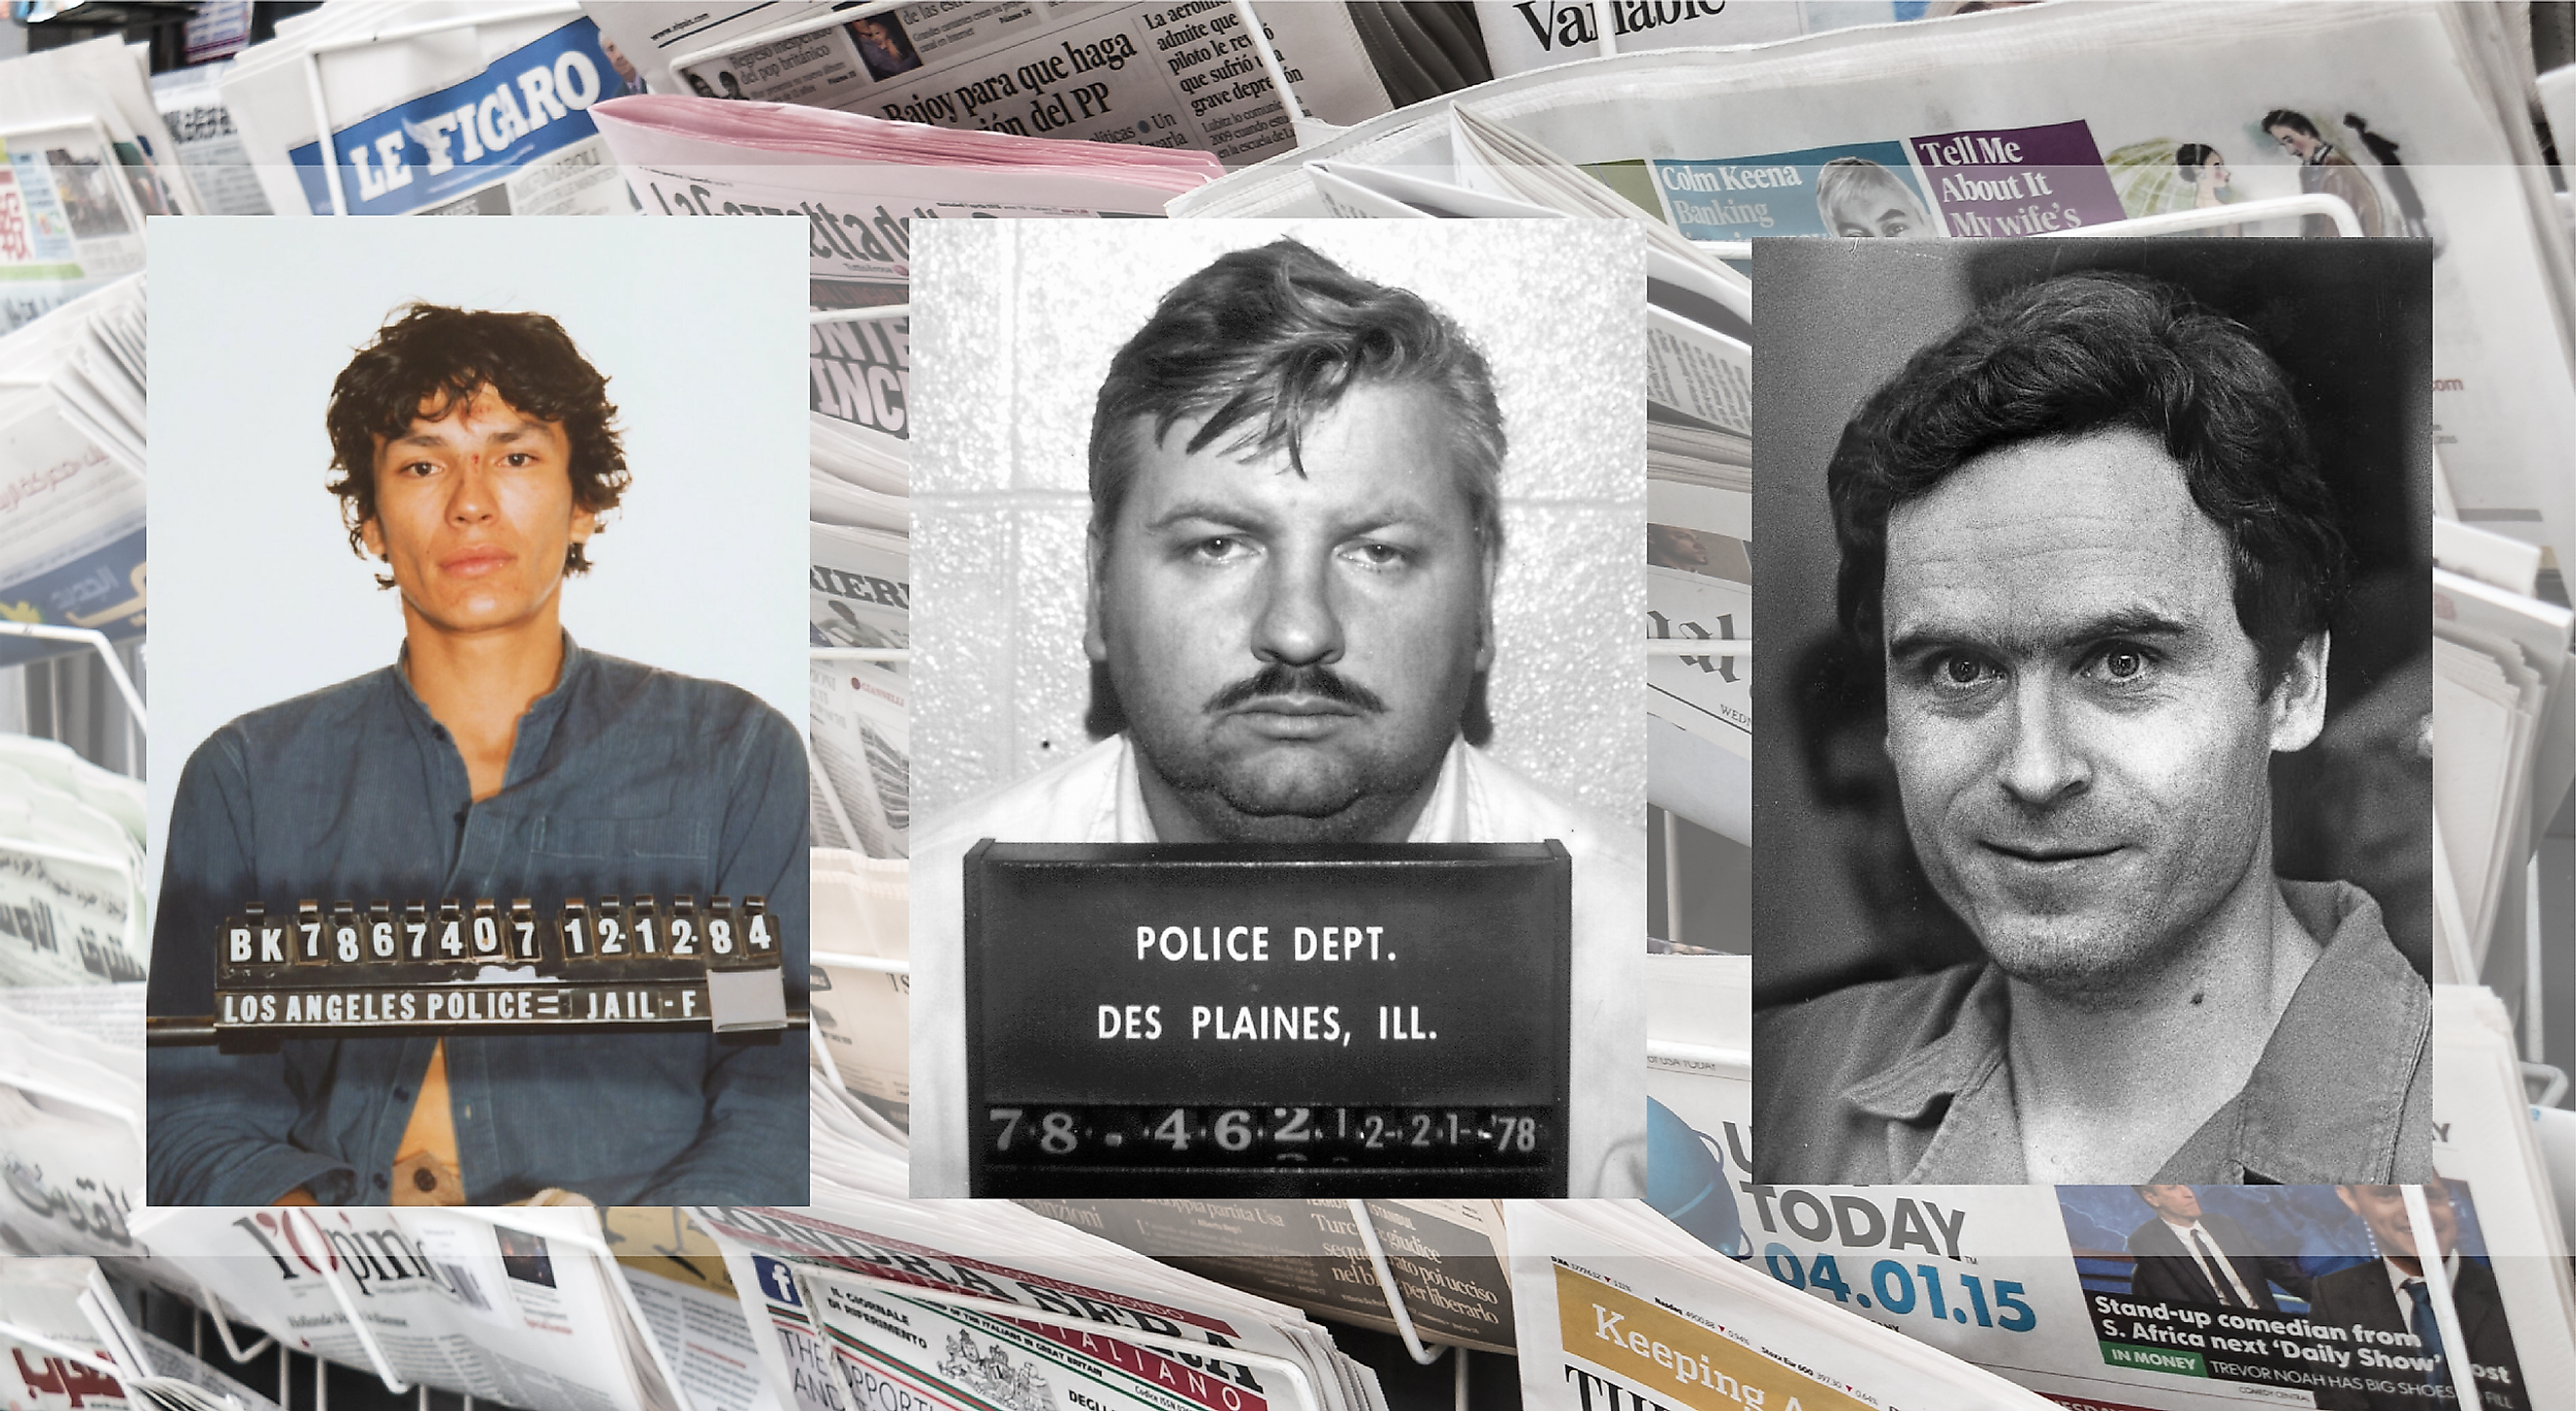 serial killers from the US: Richard Ramirez, John Wayne Gacy, Ted Bundy